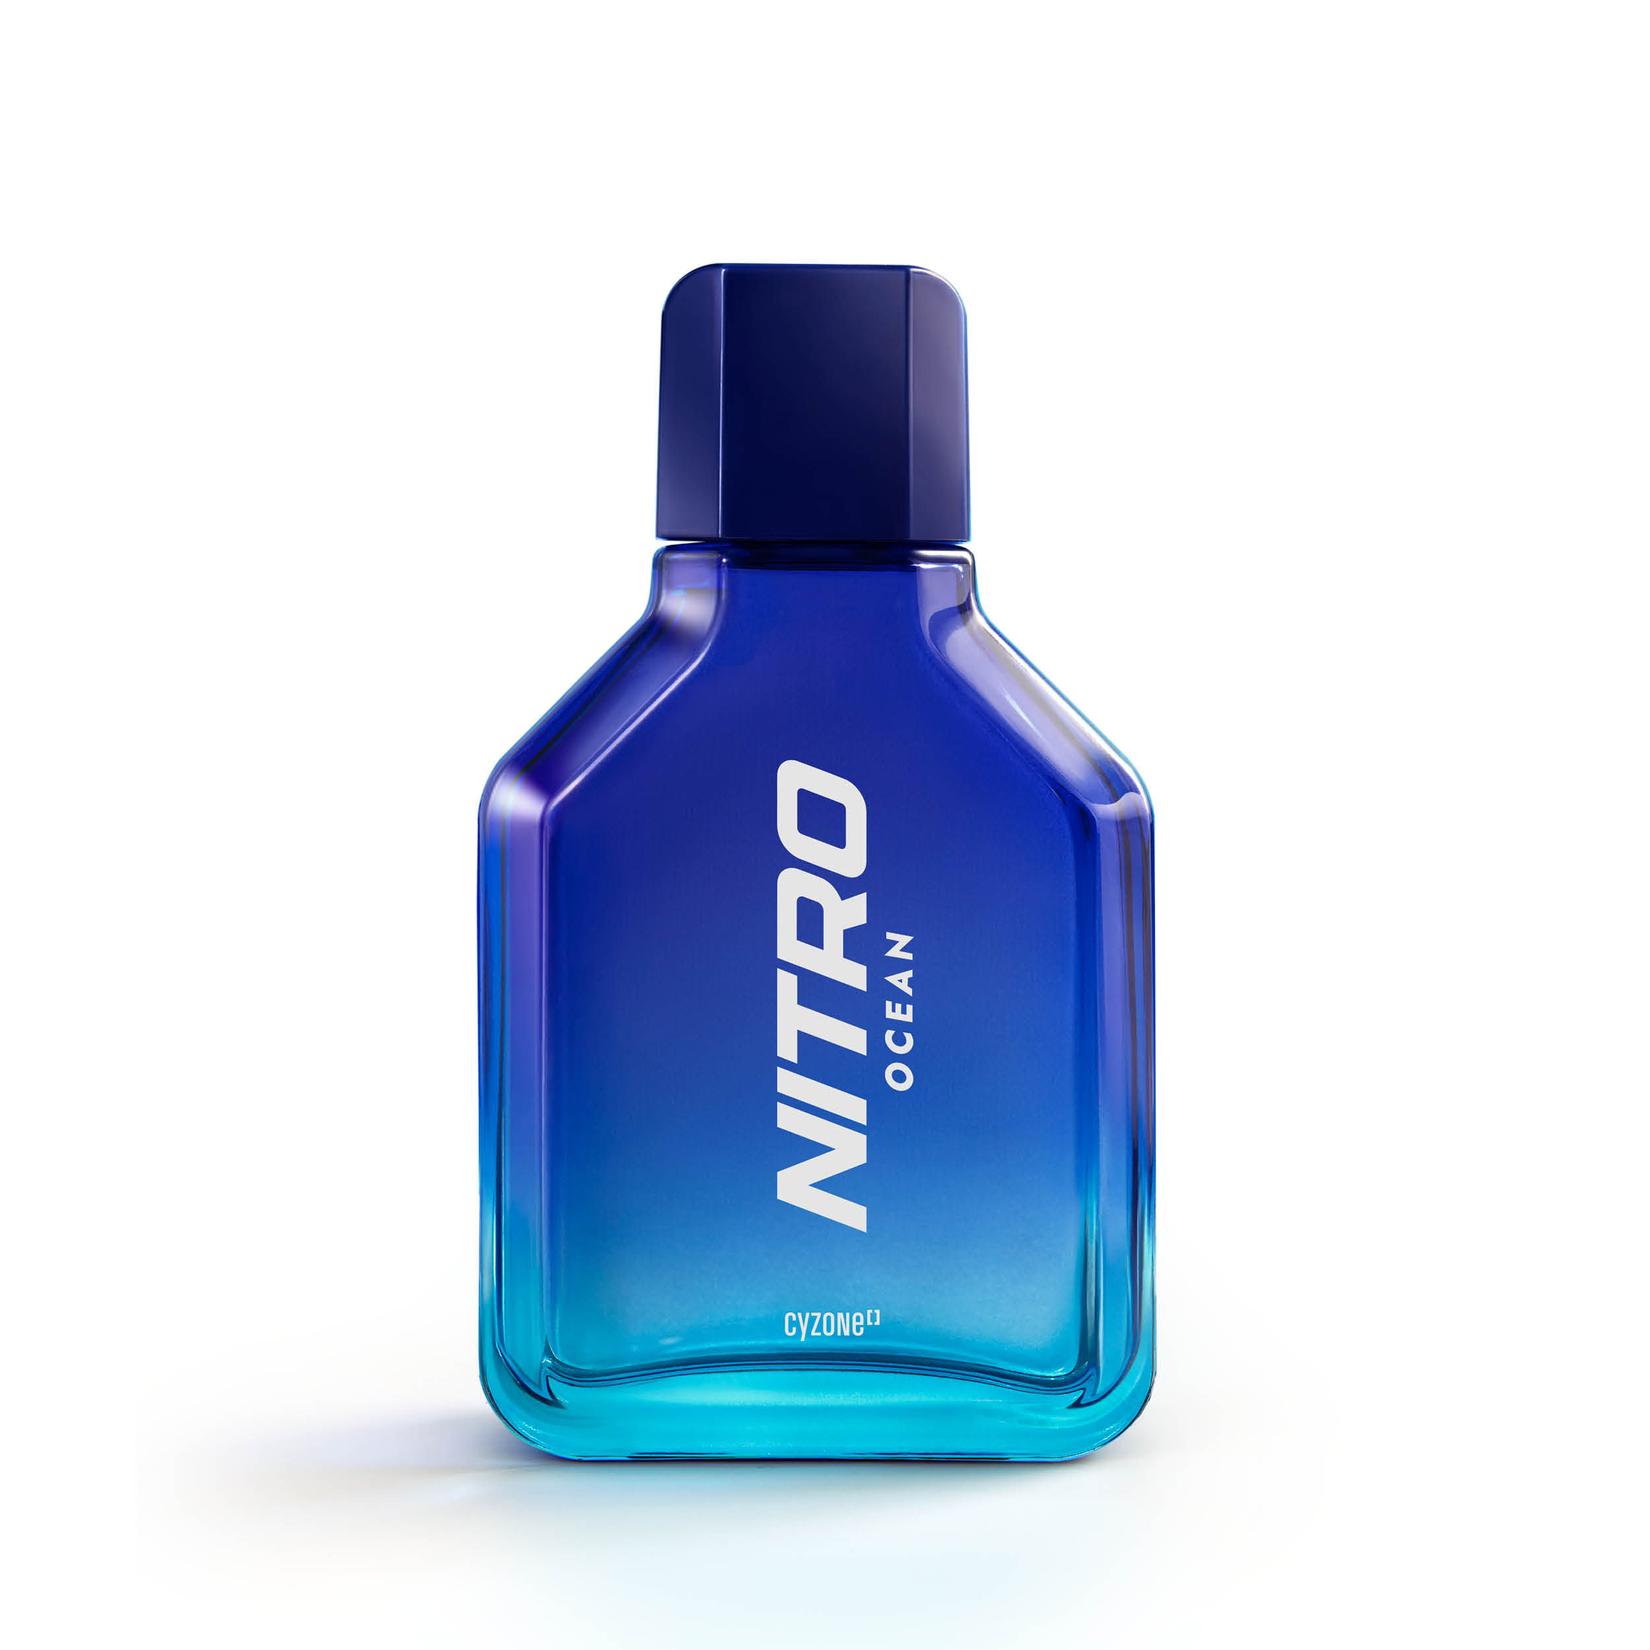 Oferta de Perfume de Hombre Nitro Ocean, 90 ml por $22610 en Cyzone